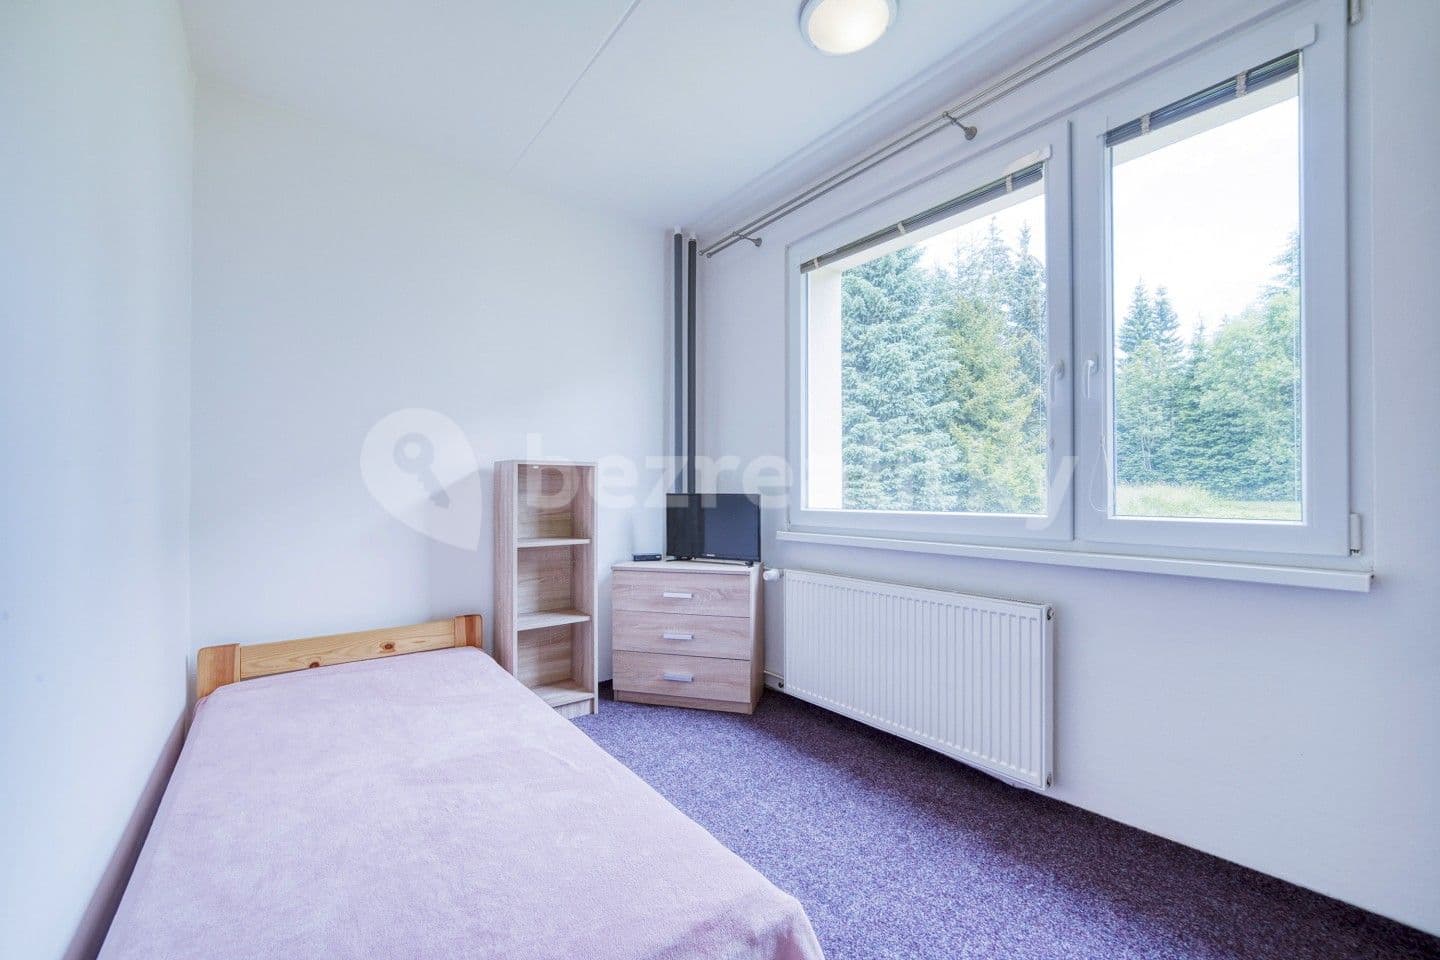 3 bedroom with open-plan kitchen flat for sale, 71 m², Harrachov, Liberecký Region